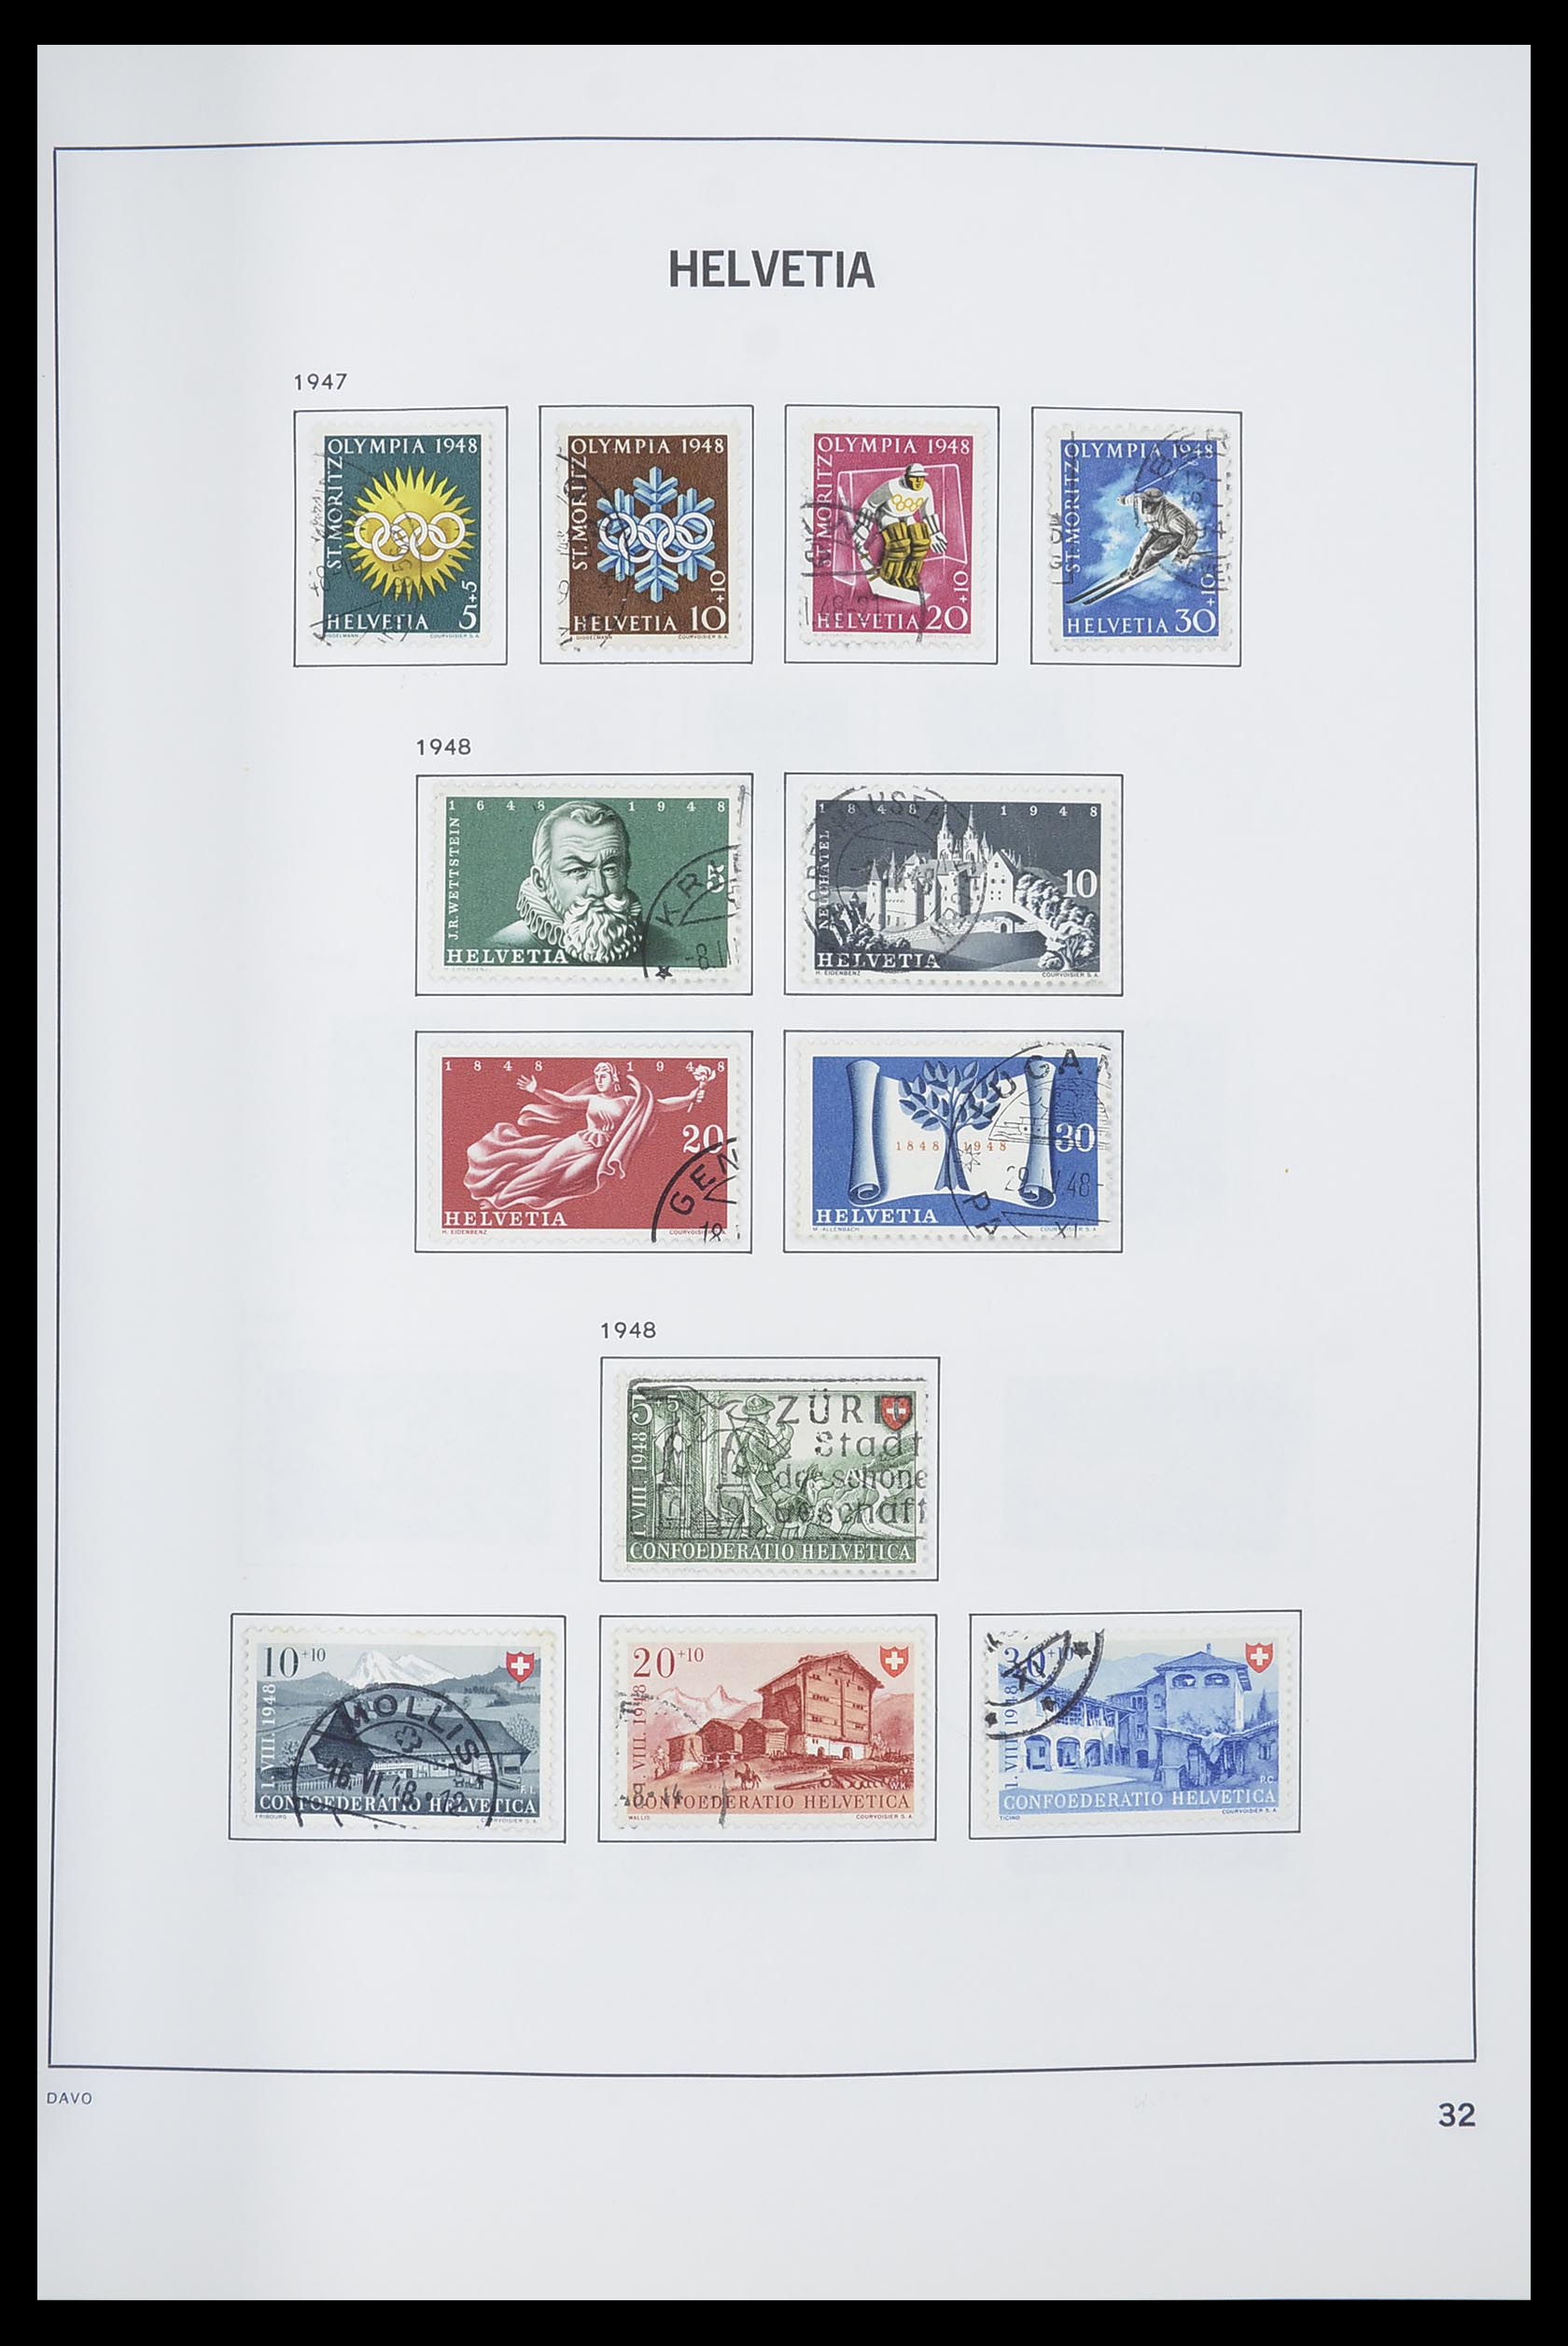 33559 033 - Stamp collection 33559 Switzerland 1850-2000.